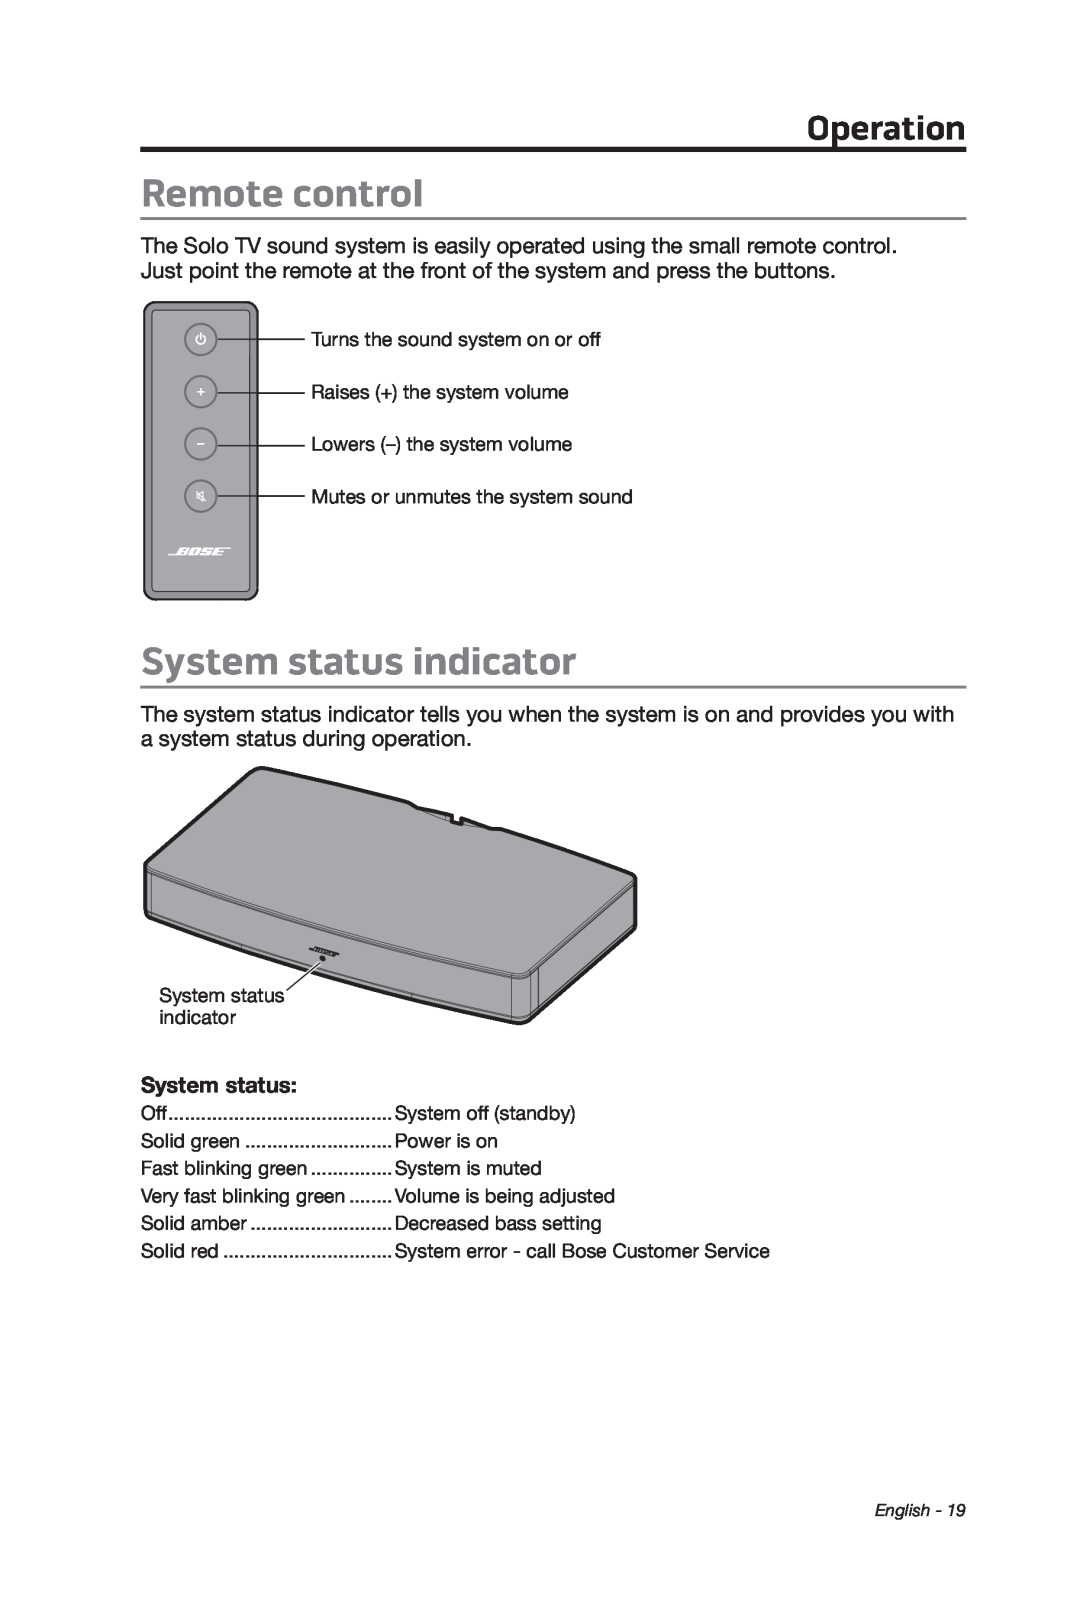 Bose 347205/1300 manual Remote control, System status indicator, Operation 